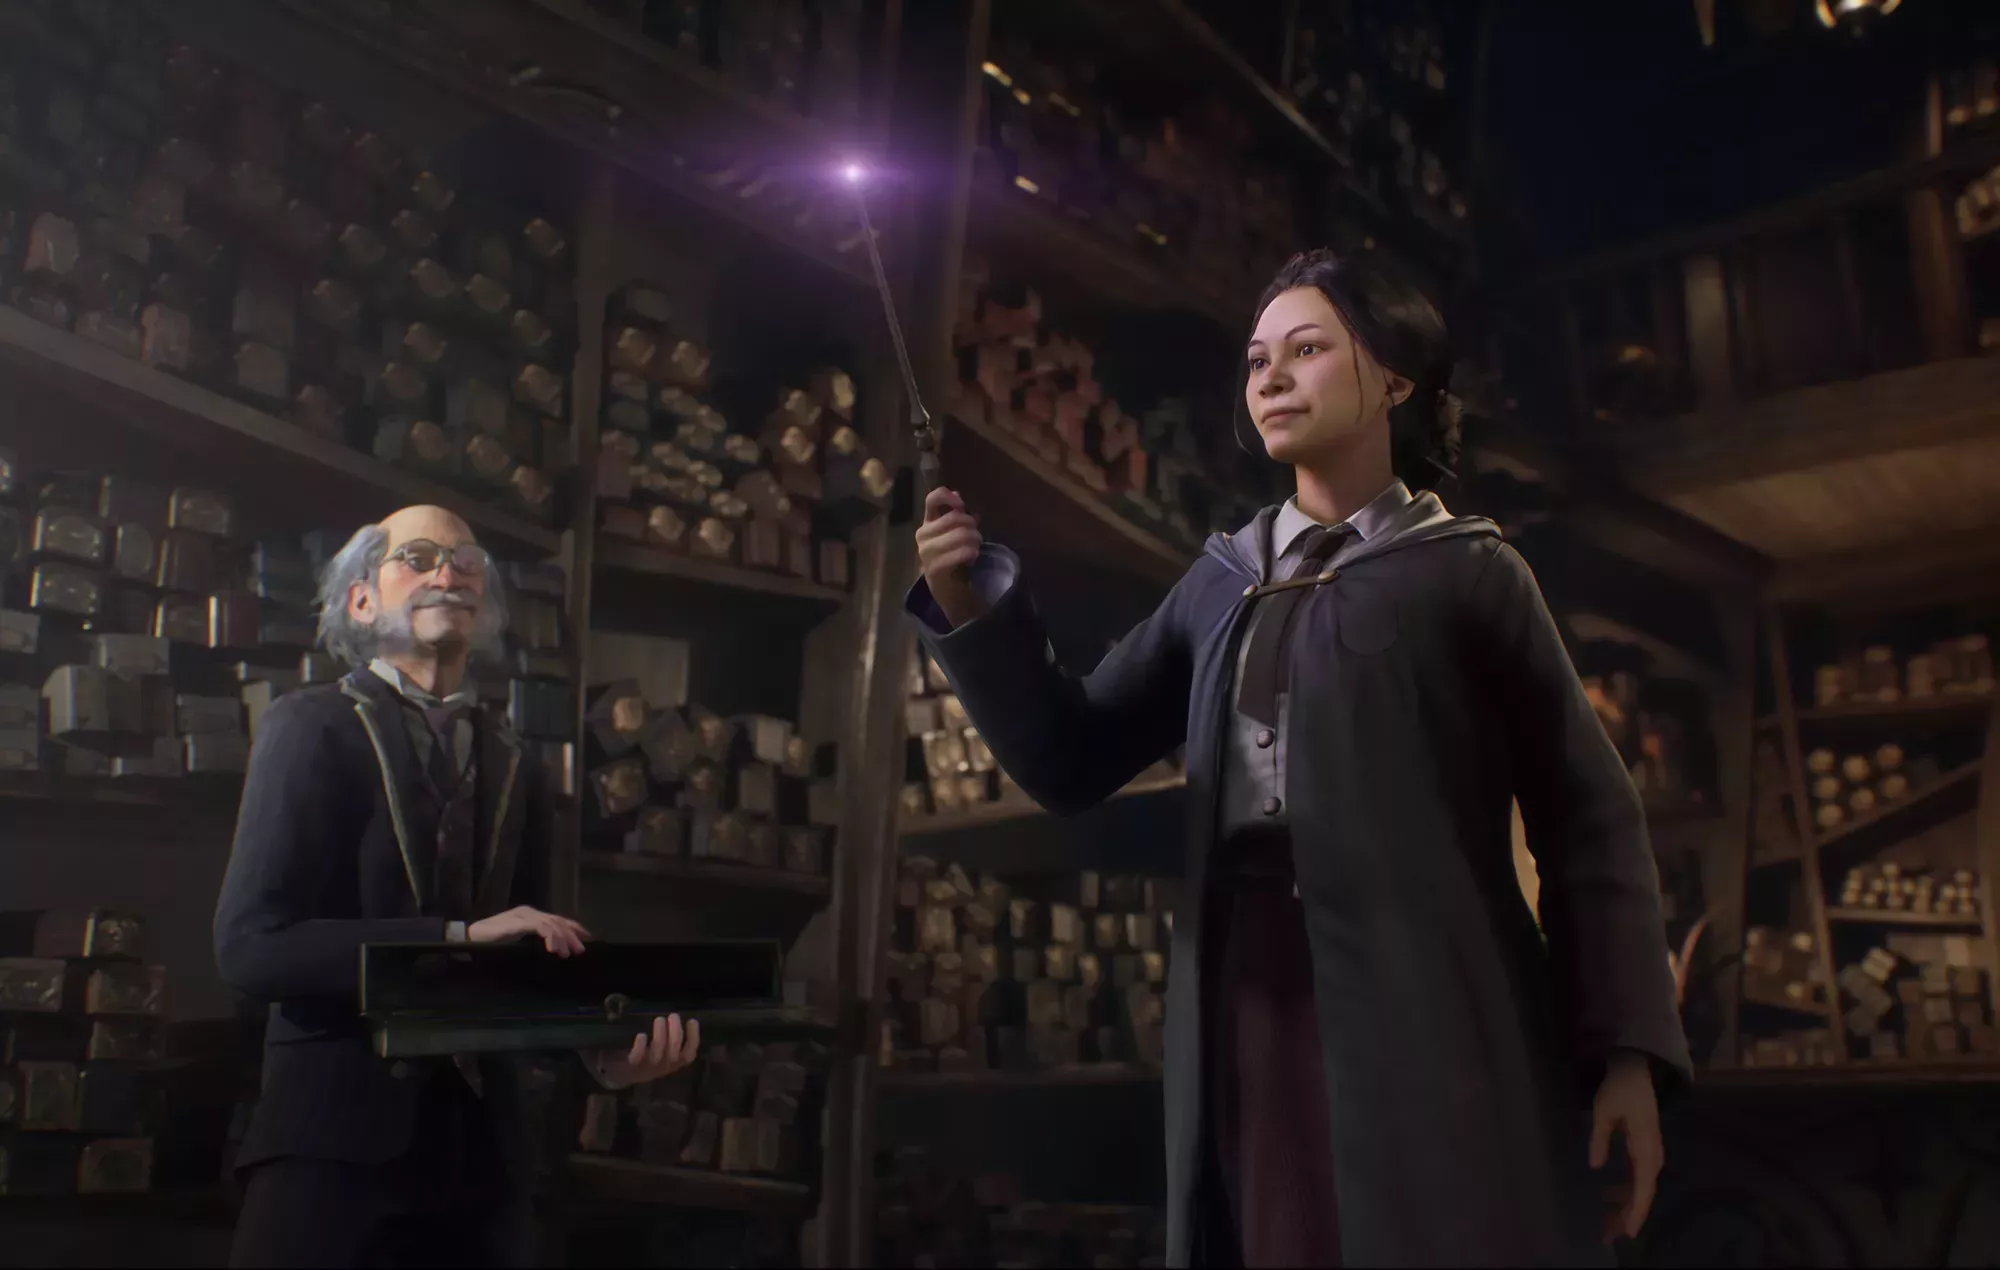 El legado de Hogwarts' presenta al primer personaje transgénero de la franquicia 'Harry Potter